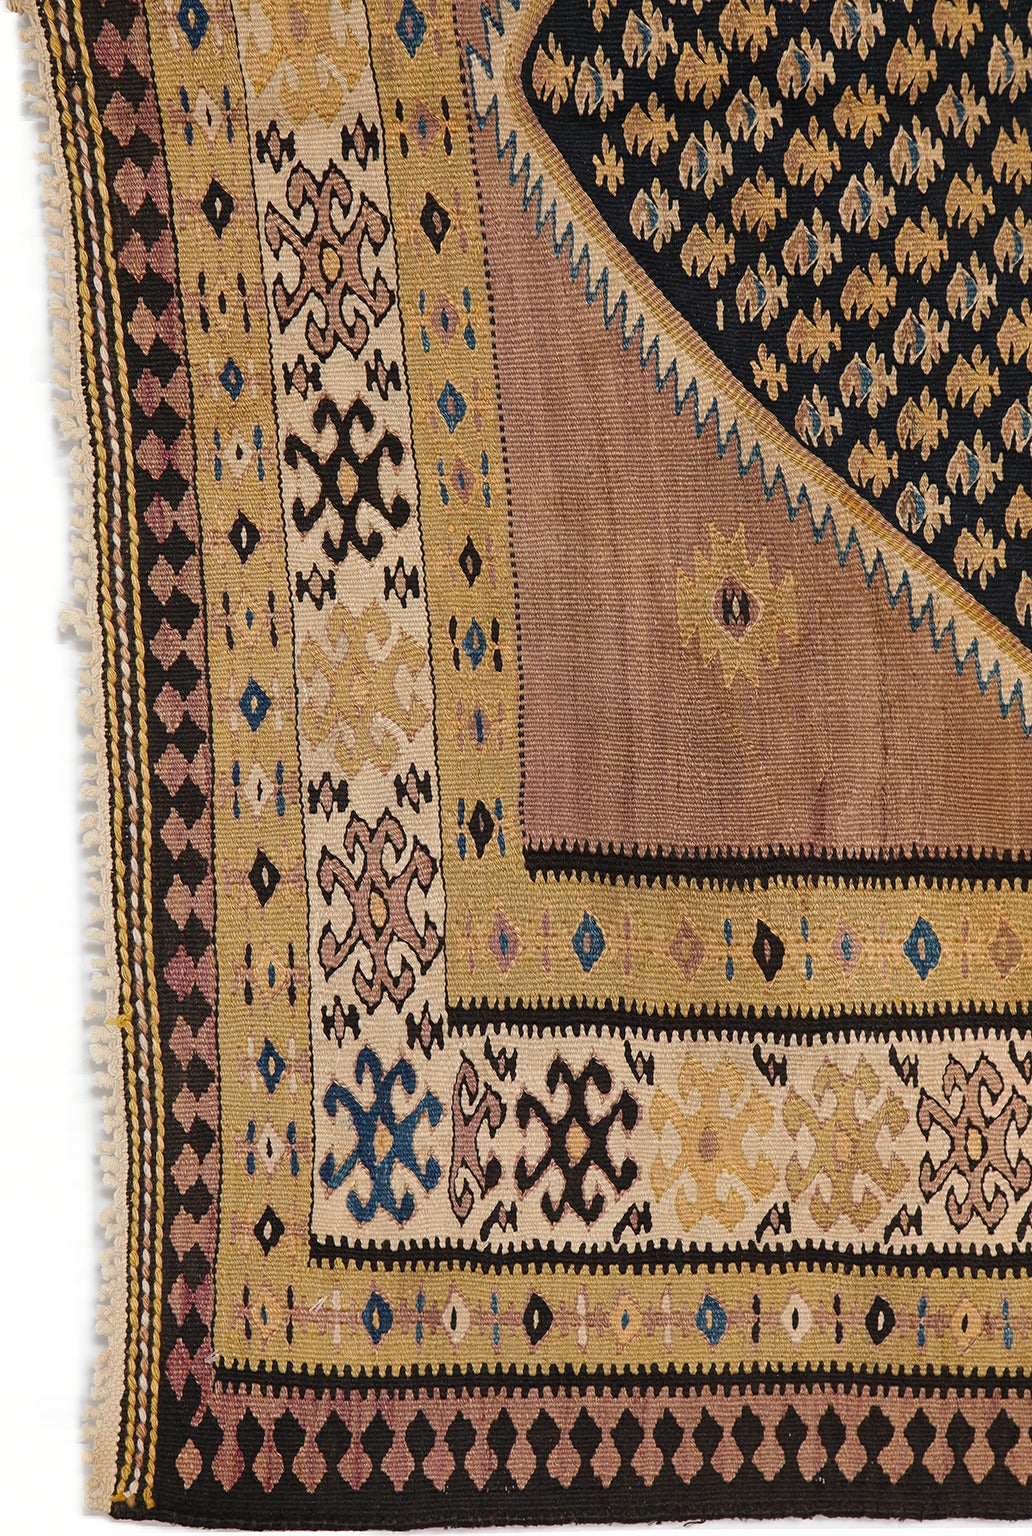 Late 19th Century Persian Bidjar Kilim, in Pure Wool and Natural Vegetable Dyes, circa 1890